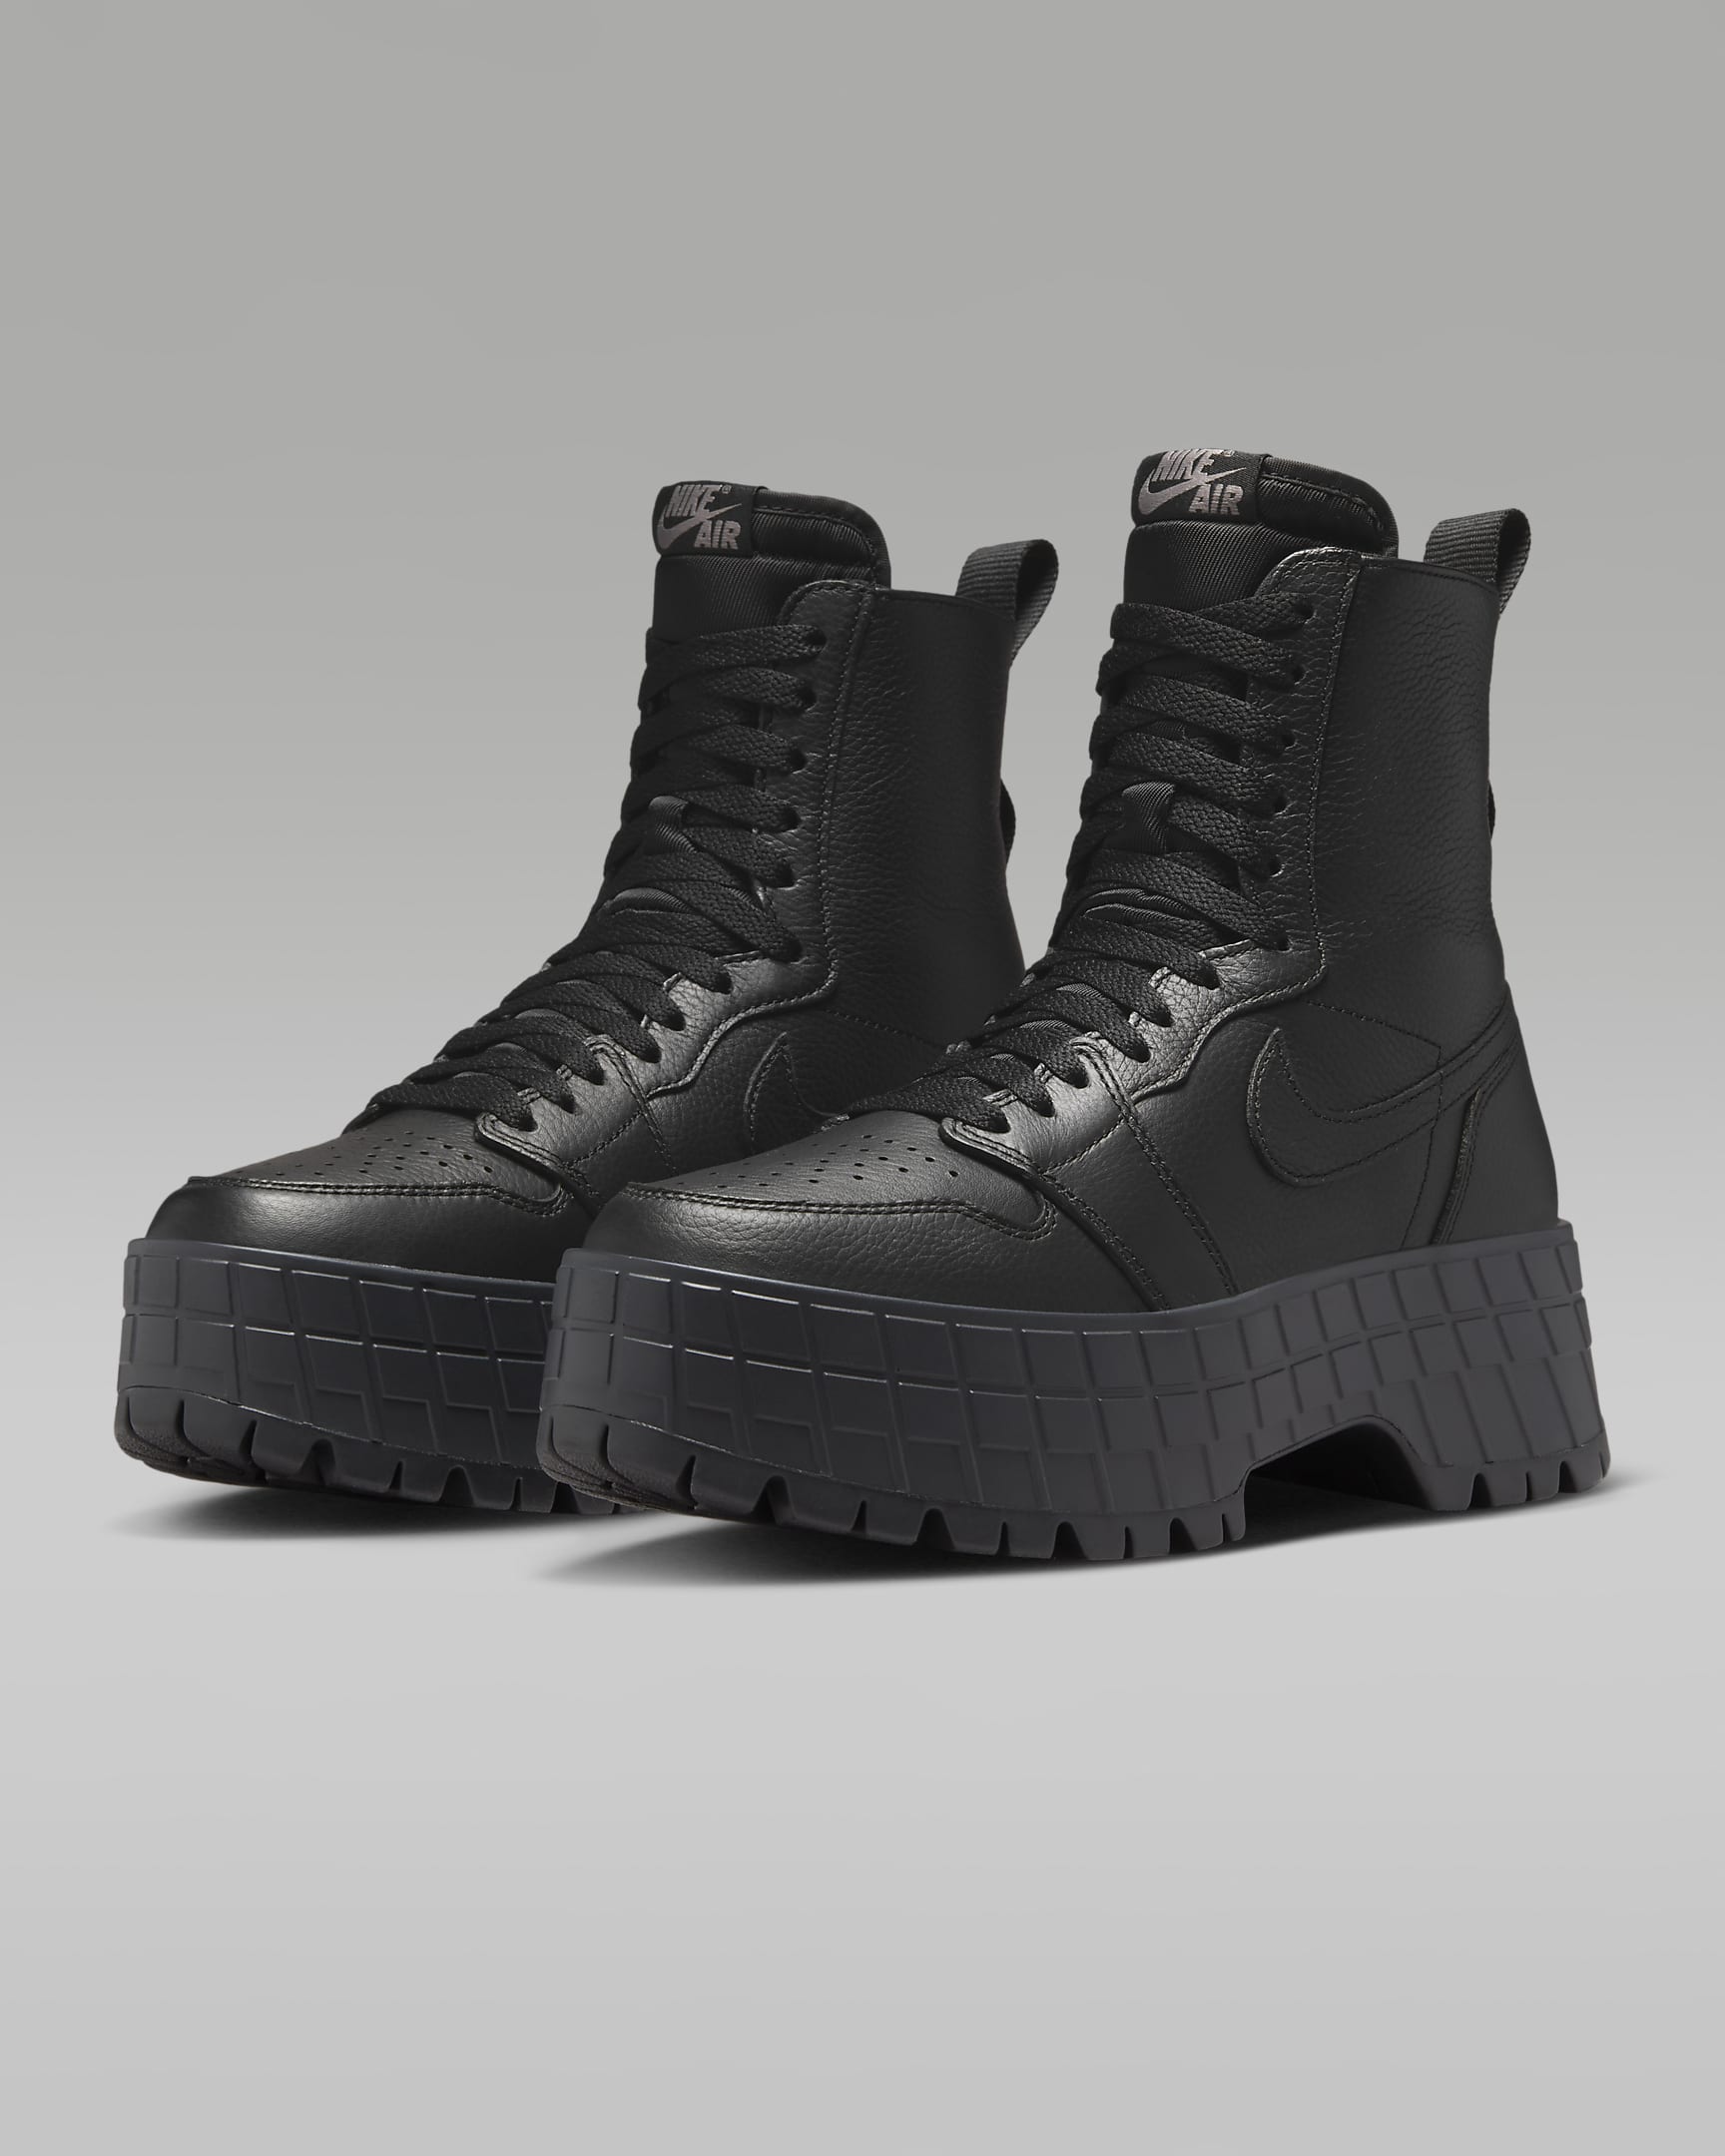 Air Jordan 1 Brooklyn Women's Boots - Black/Black/Flat Pewter